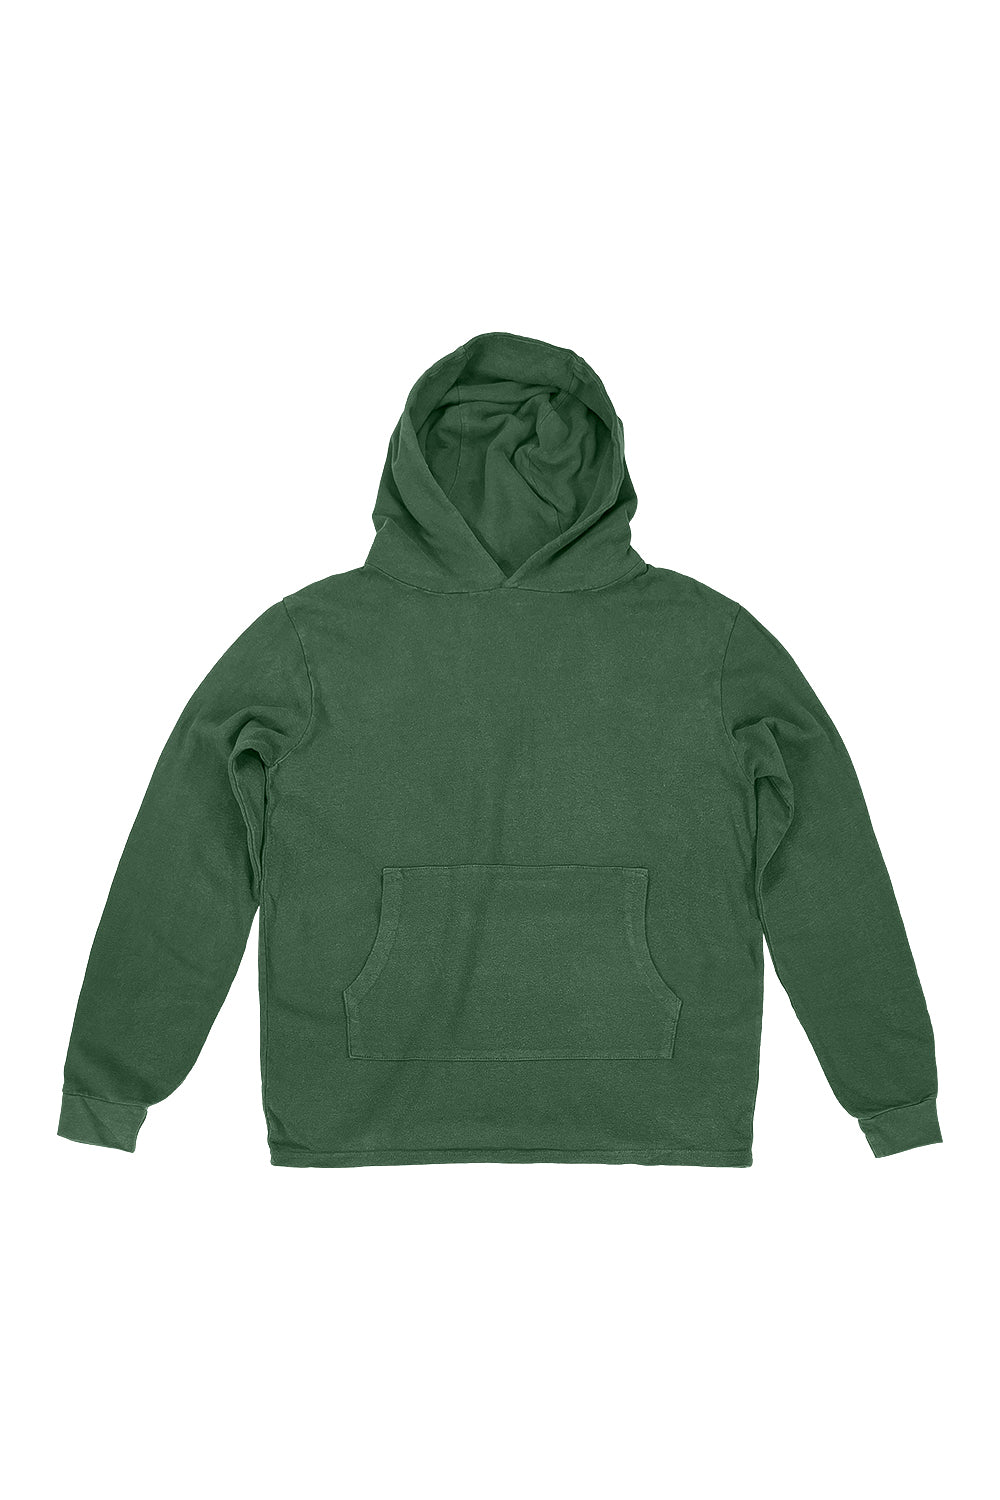 Santa Cruz Hooded Long Sleeve | Jungmaven Hemp Clothing & Accessories / Color: Hunter Green